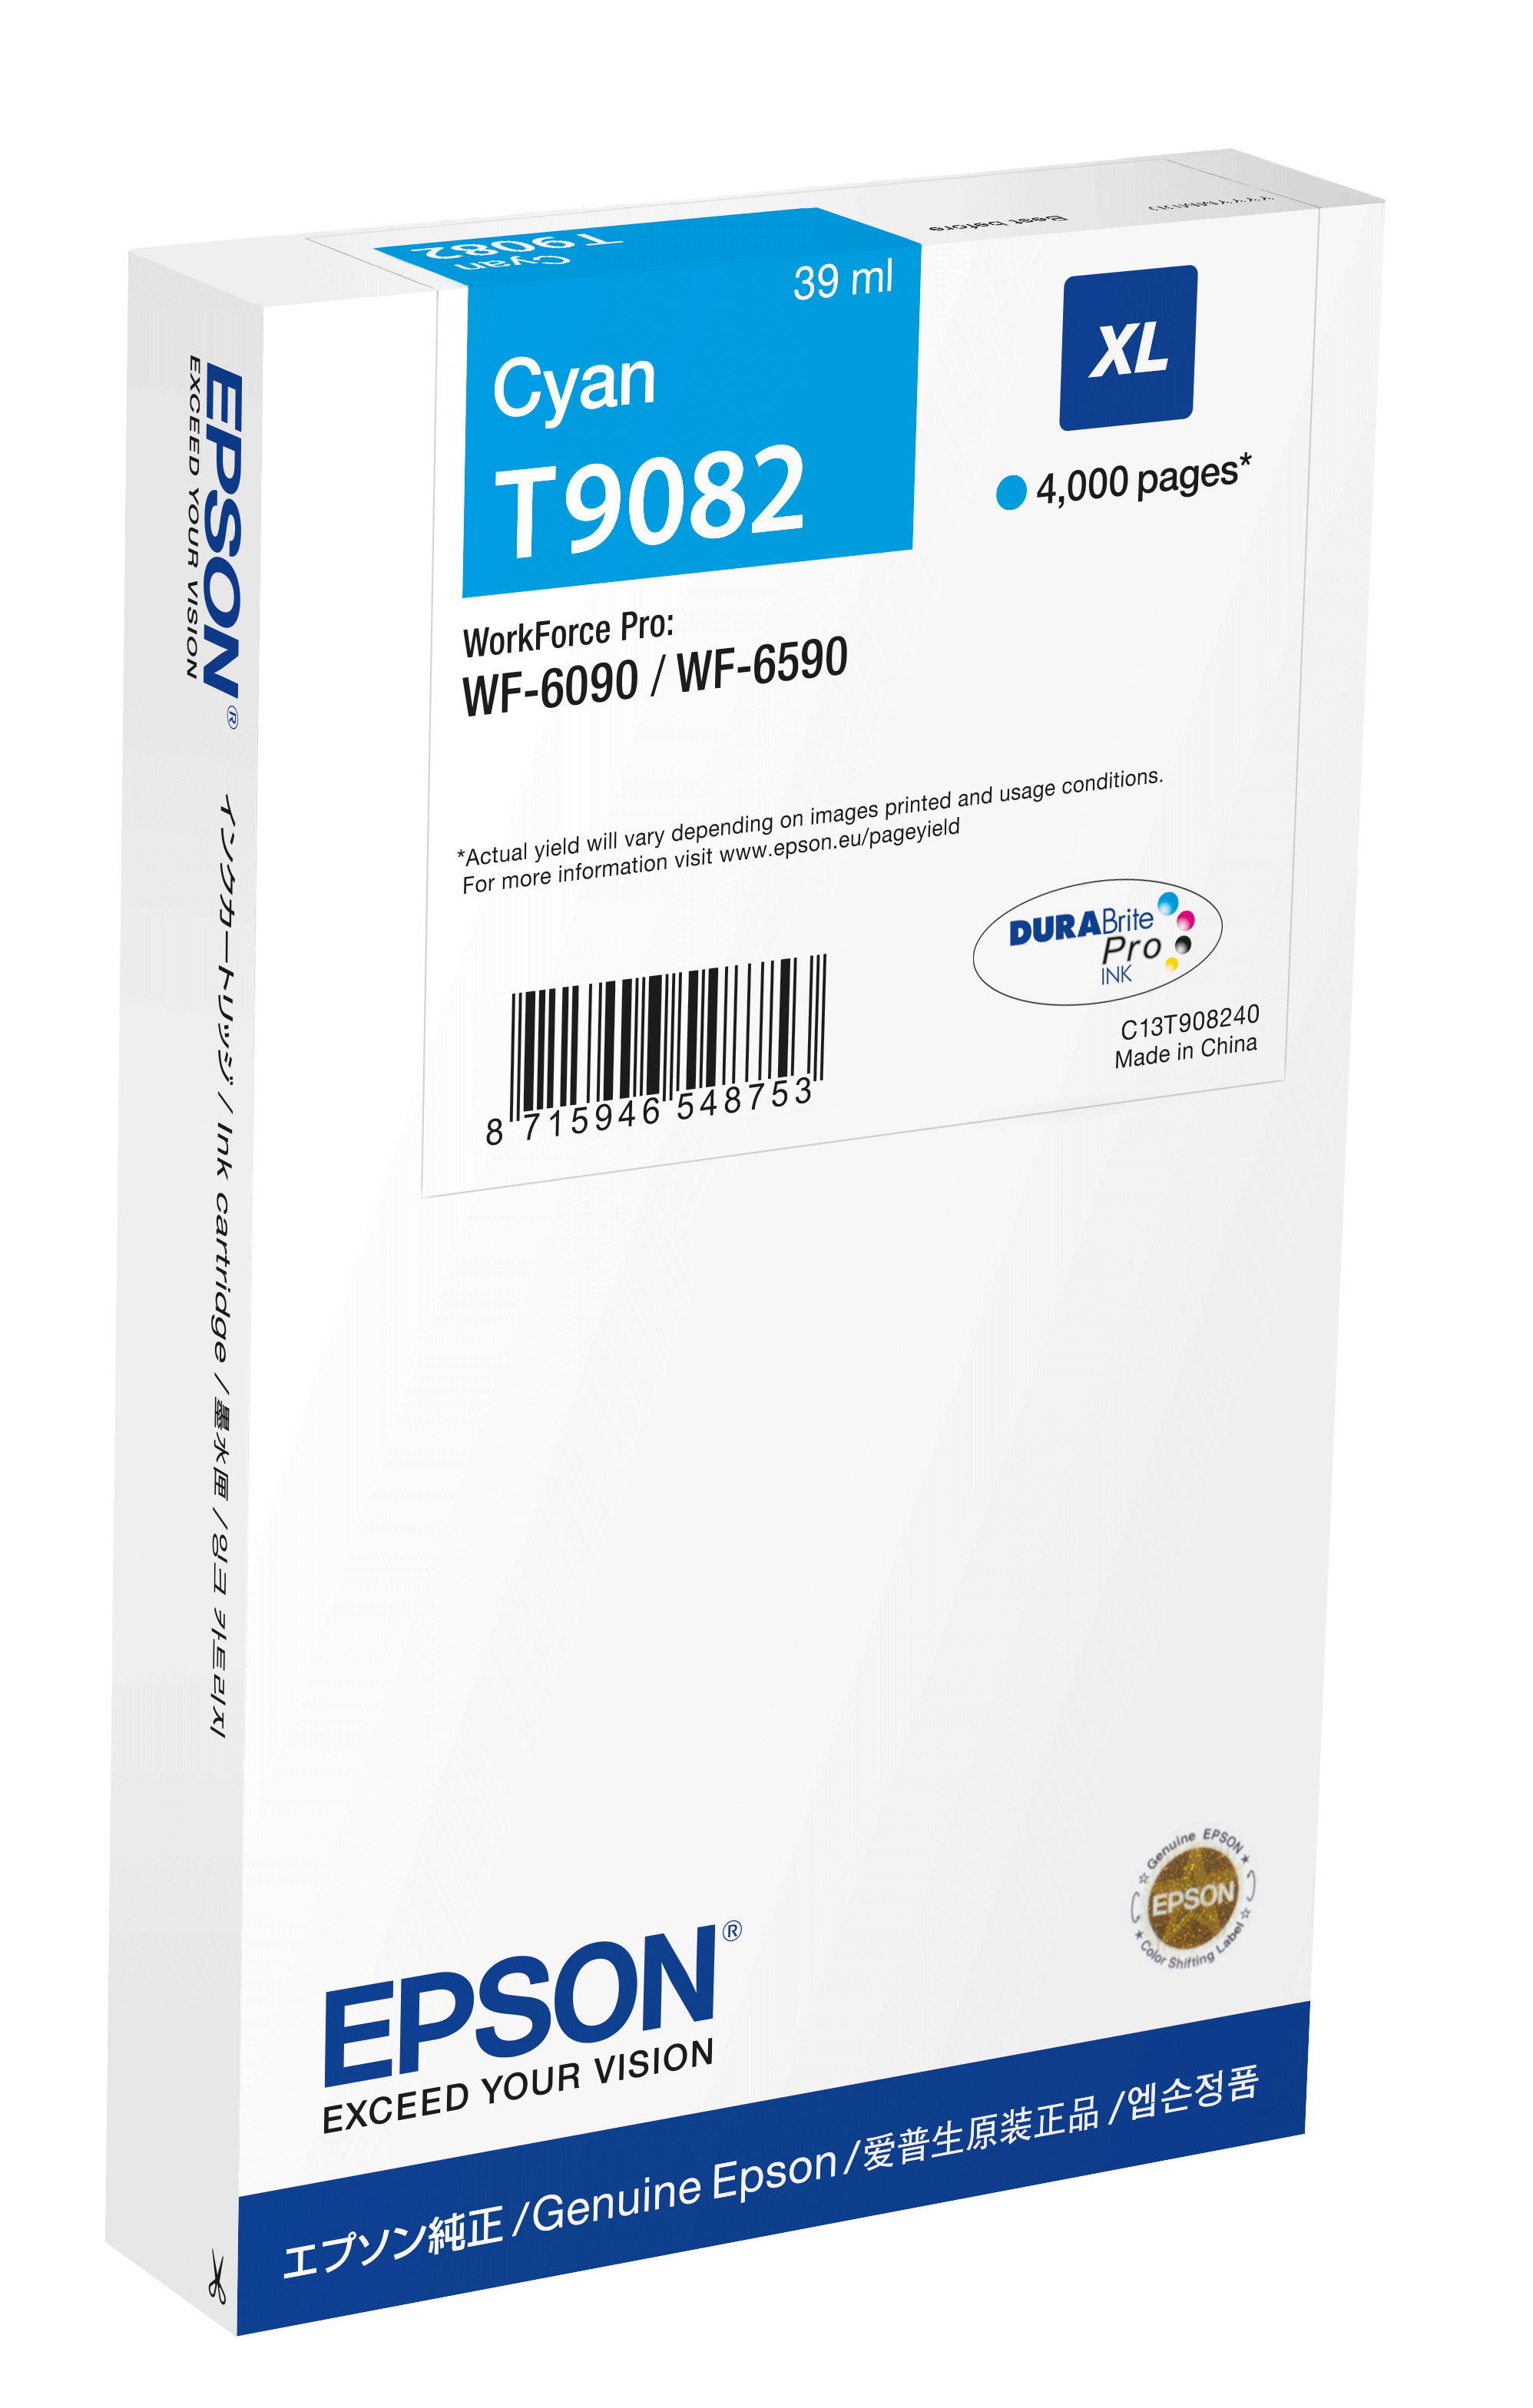 Epson Ink Cartridge XL Cyan single pack / cyaan